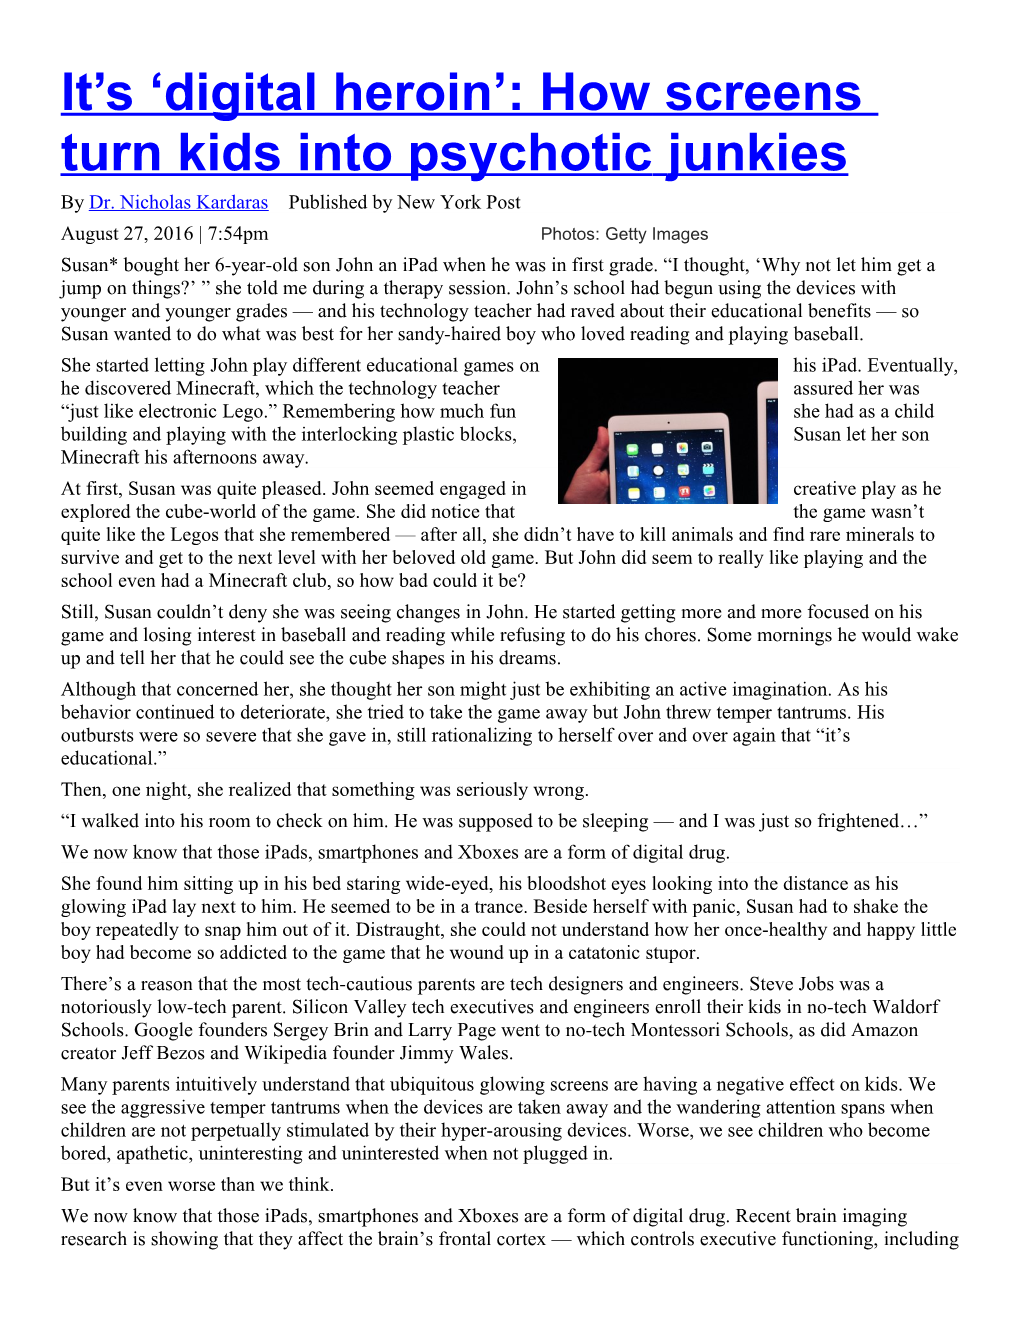 It S Digital Heroin : How Screens Turn Kids Into Psychoticjunkies